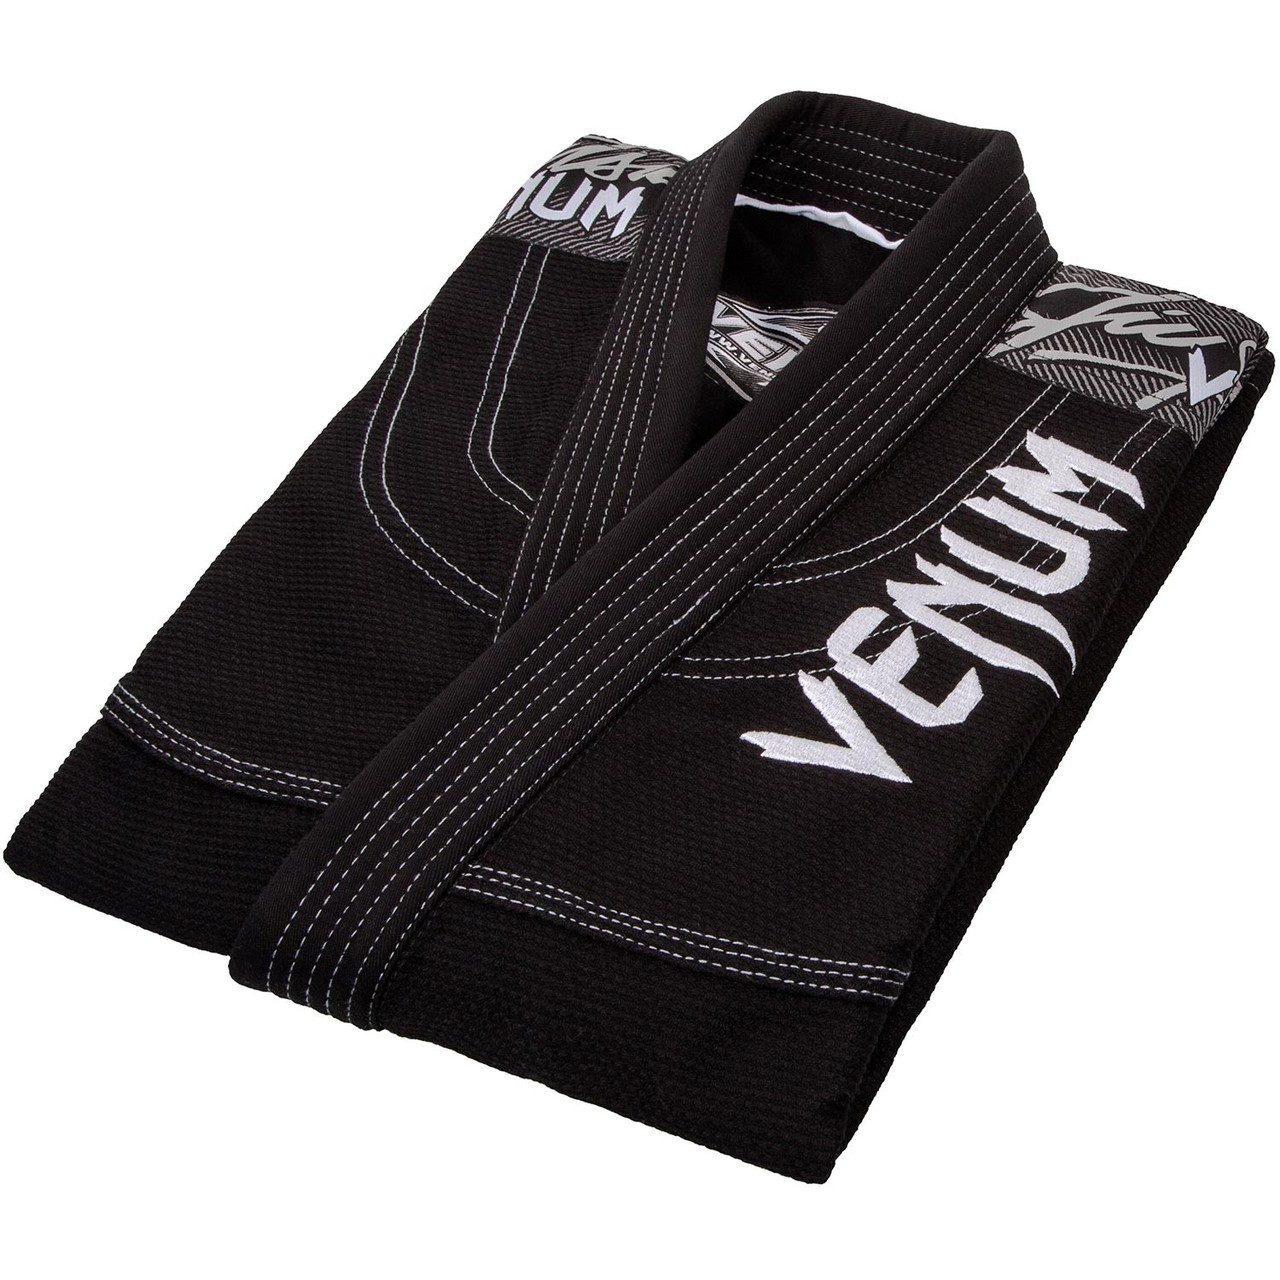 Venum challenger 3.0 BJJ Gi Black/Grey Available at www.thejiujitsushop.com

Enjoy Free Shipping from The Jiu Jitsu Shop today! 